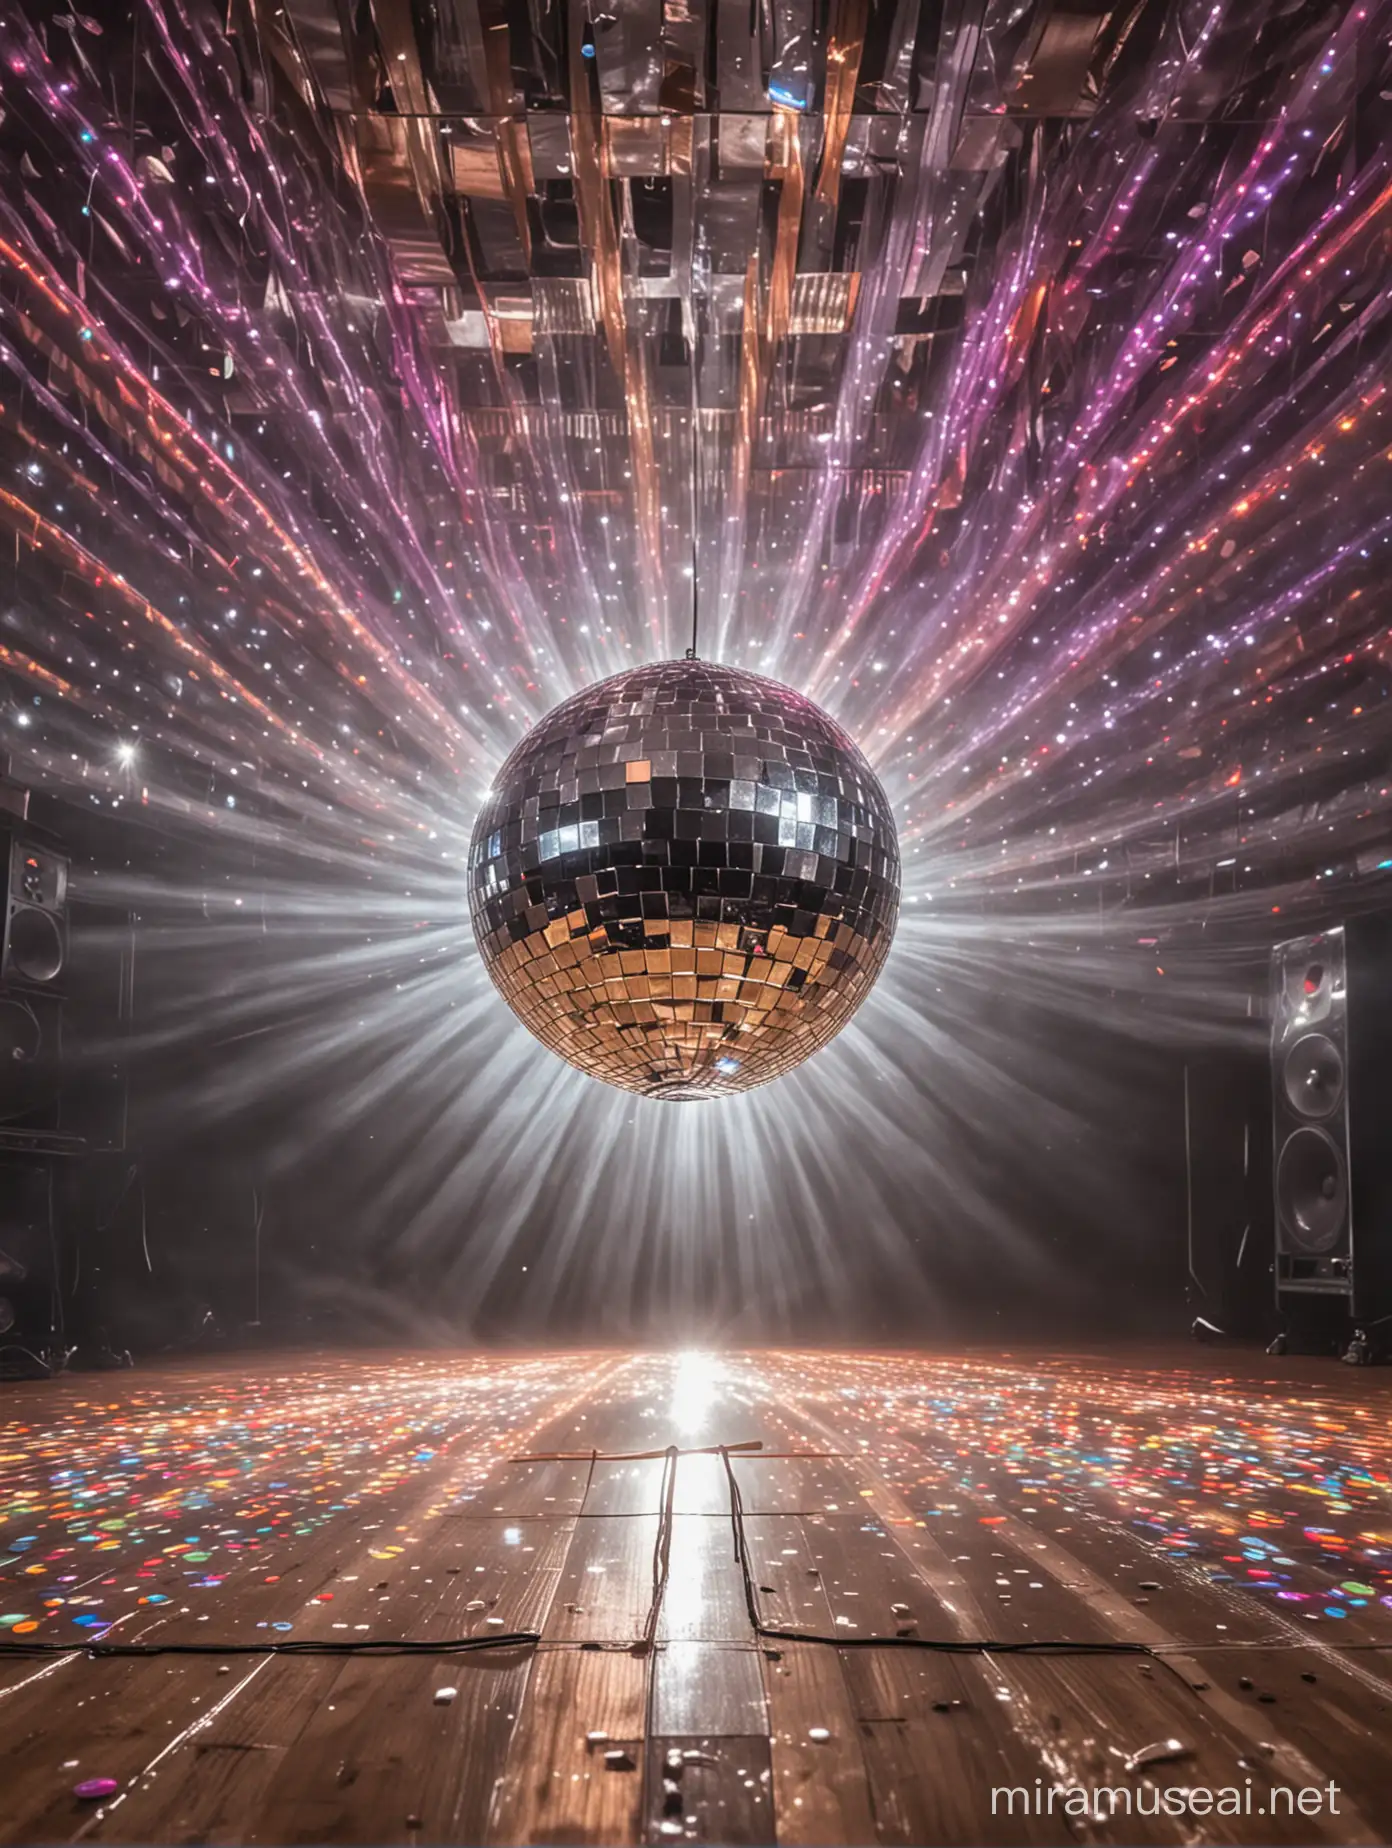 An image of a disco ball above a dance floor where vinyl discs will be dancing